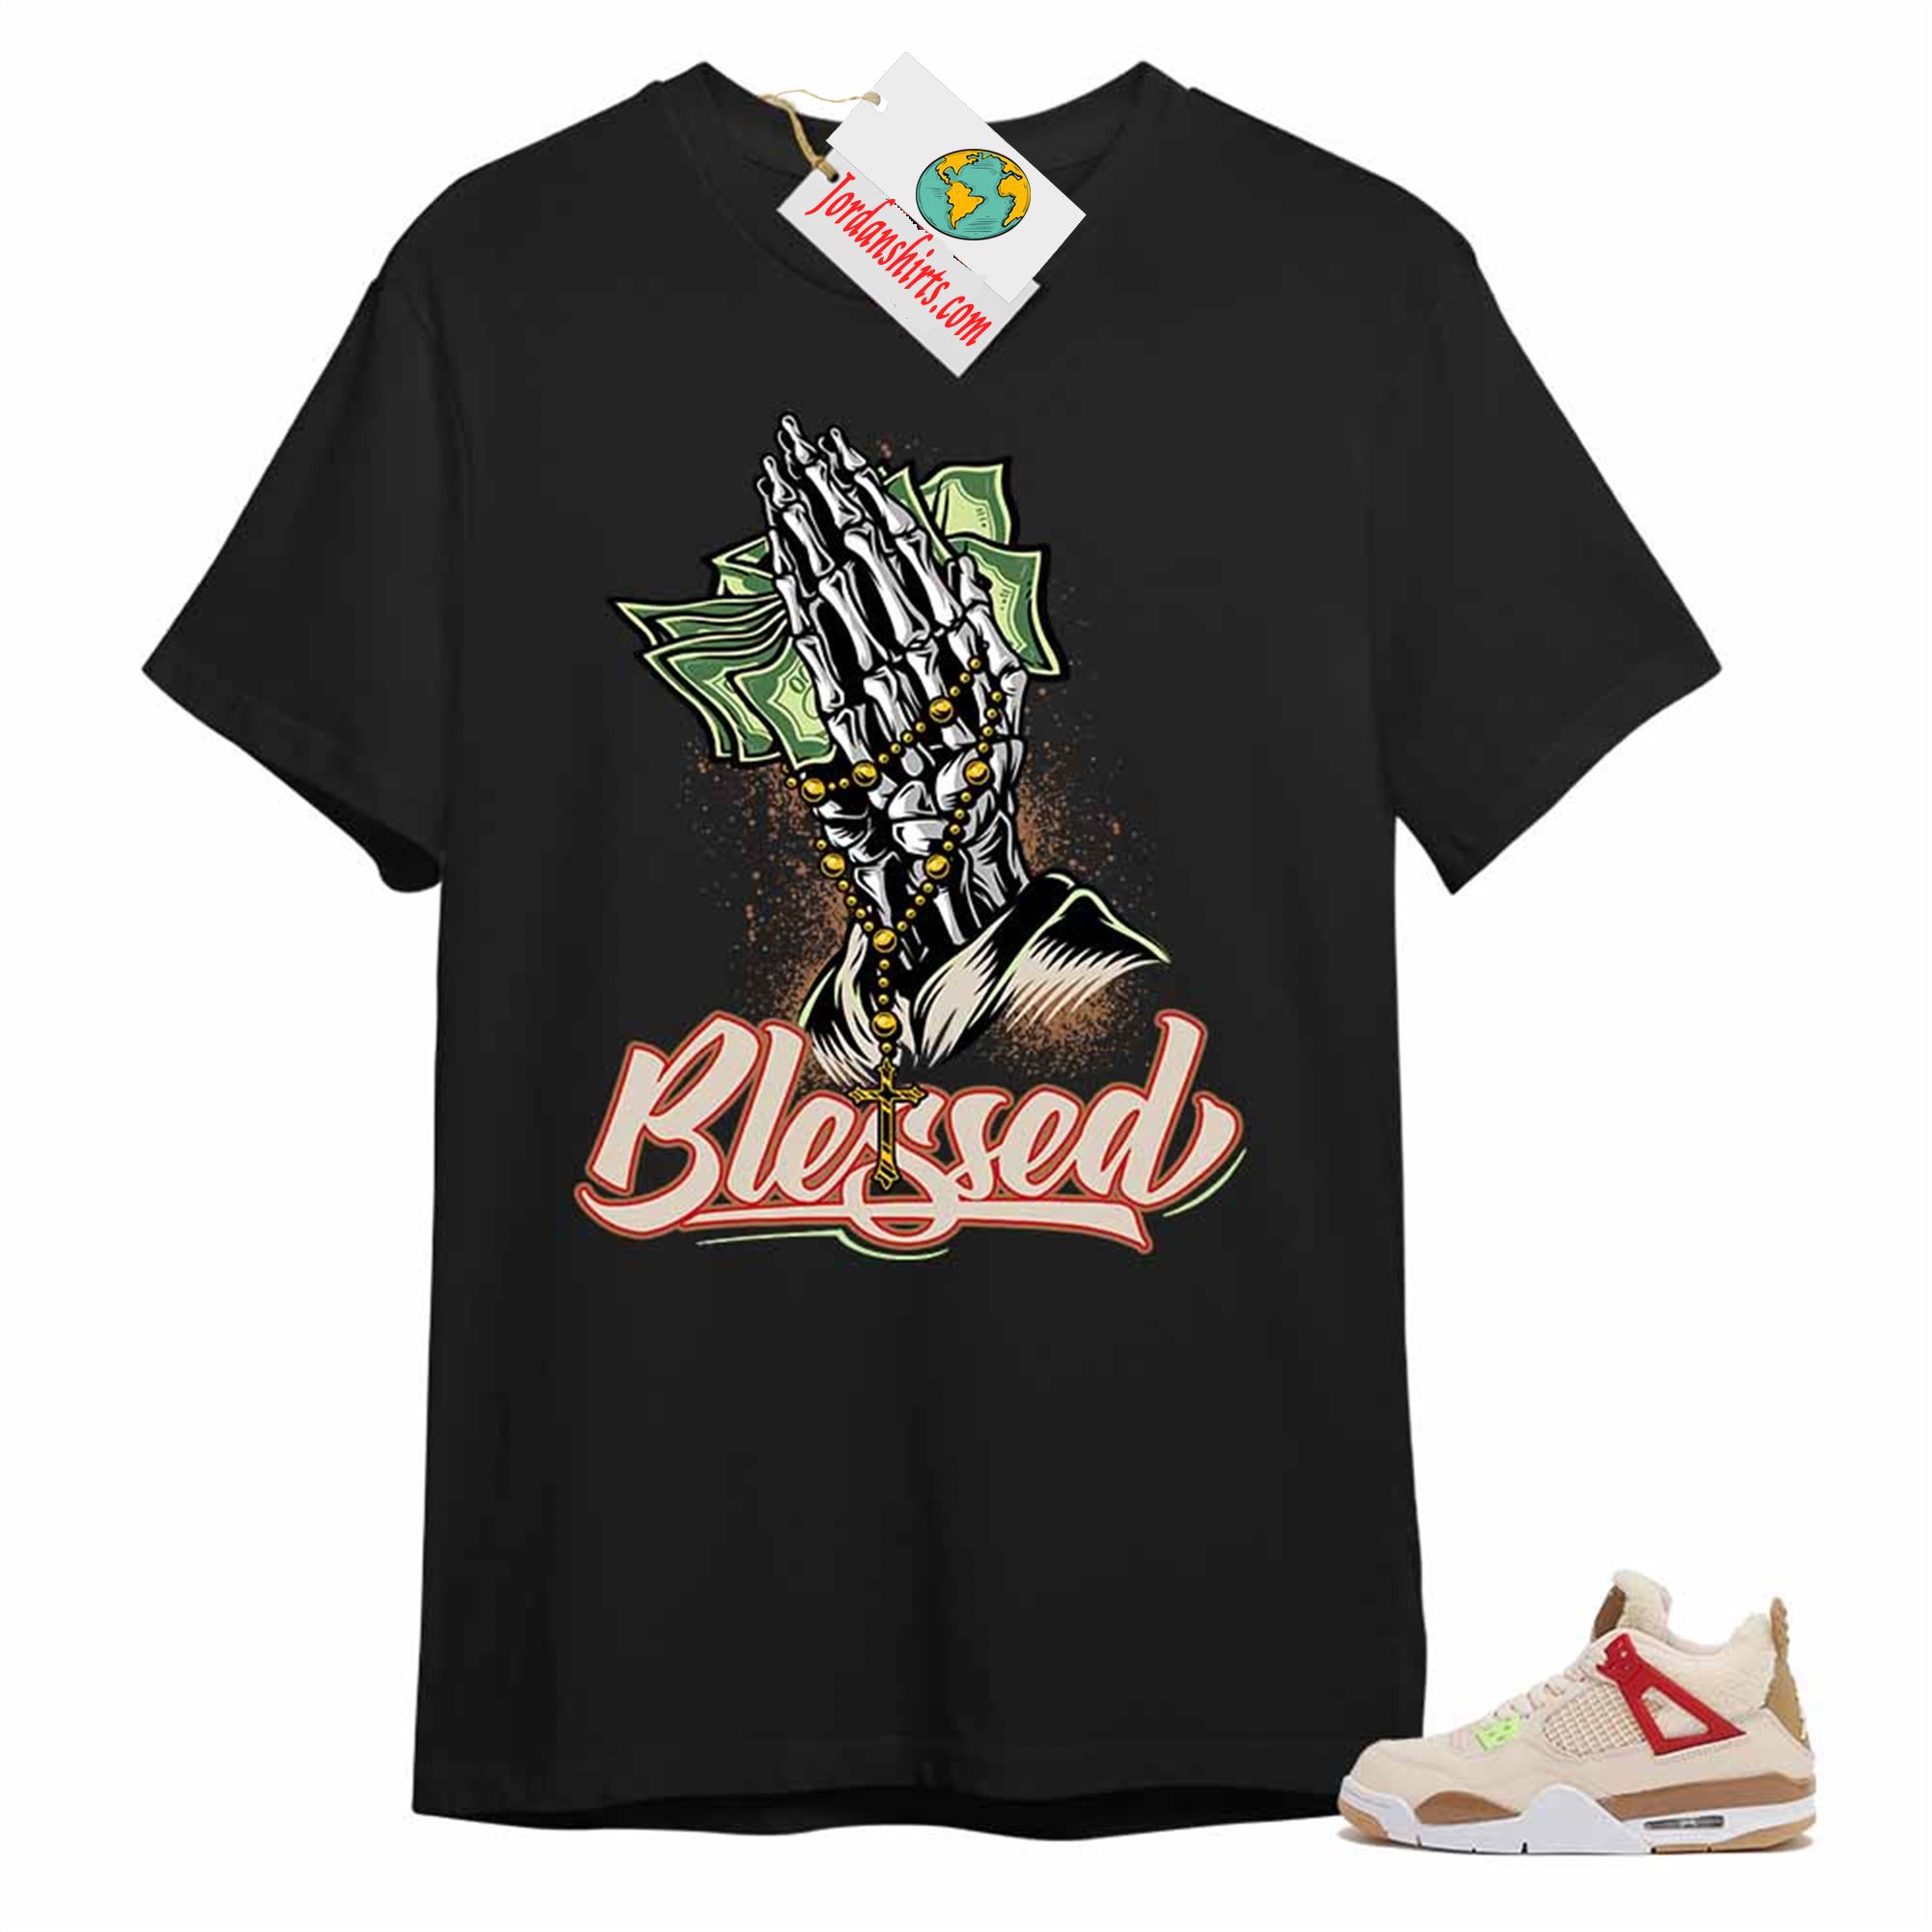 Jordan 4 Shirt, Blessed Pray Hand Money Black T-shirt Air Jordan 4 Wild Things 4s Full Size Up To 5xl